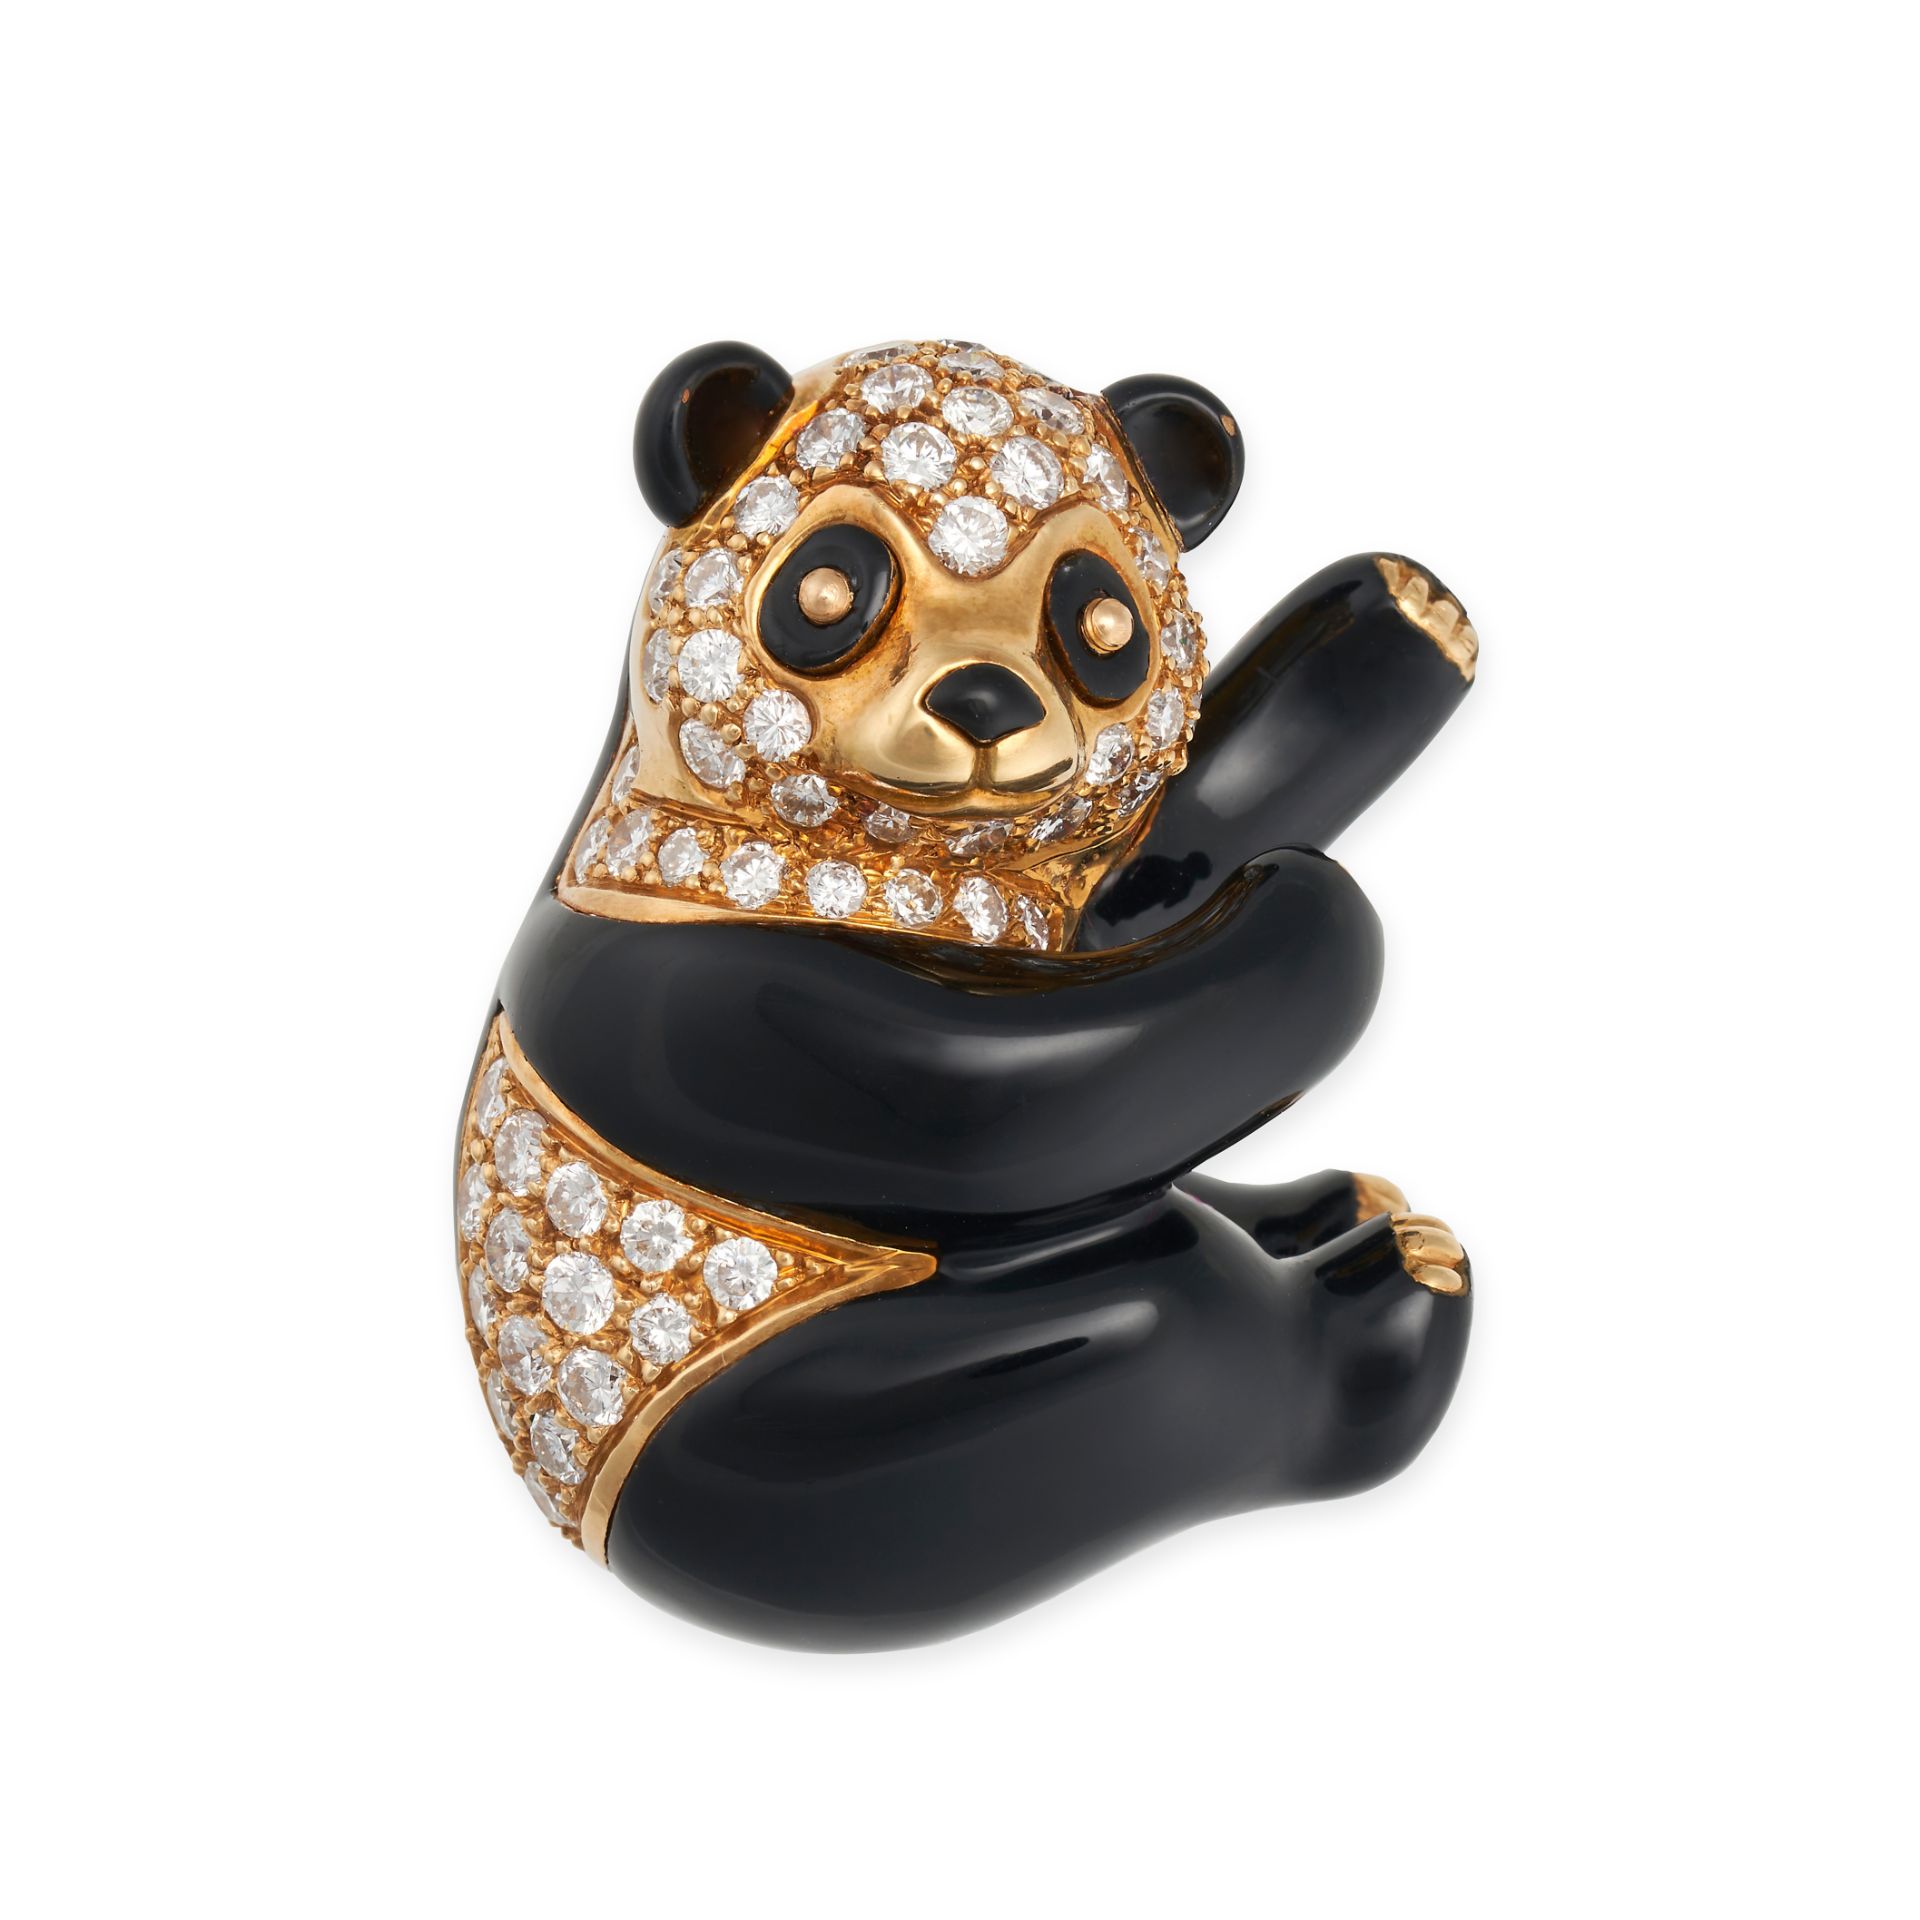 VAN CLEEF & ARPELS, A DIAMOND AND ENAMEL PANDA BROOCH in 18ct yellow gold, designed as a panda se...